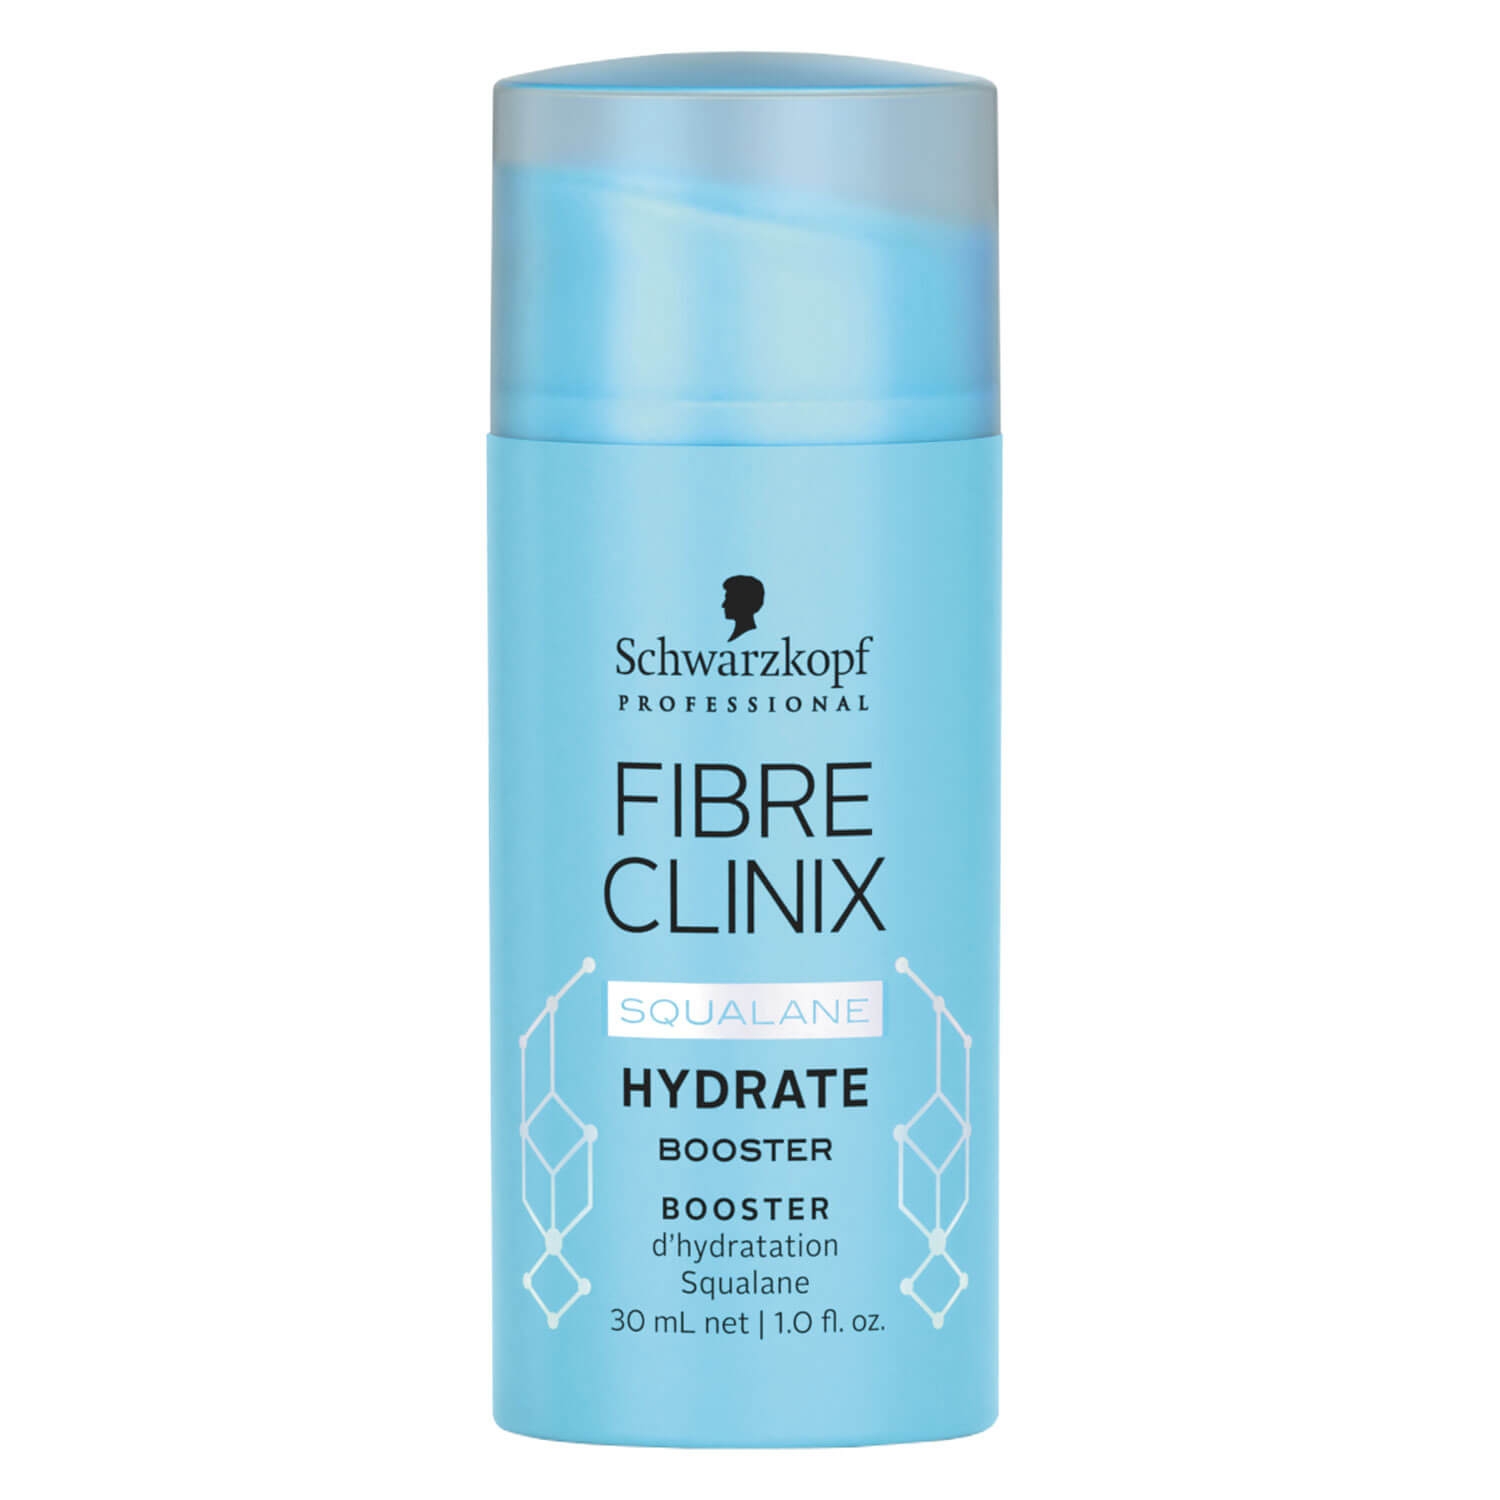 Produktbild von Fibre Clinix - Hydrate Booster